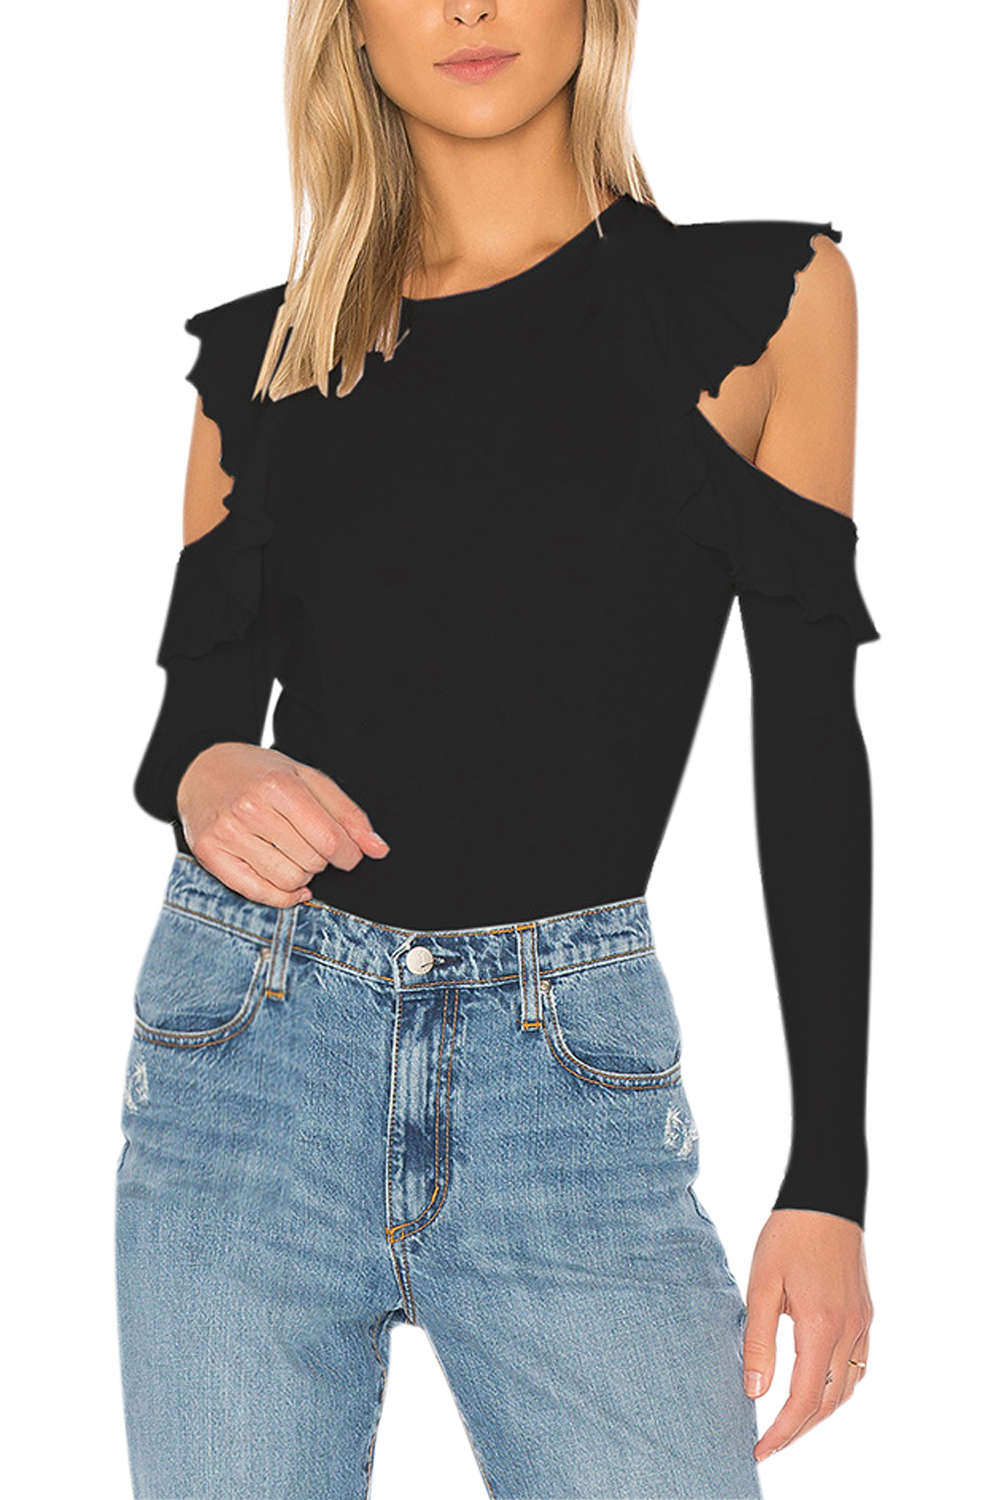 Iyasson Women Round Neck Cold-Shoulder Ruffle T Shirt